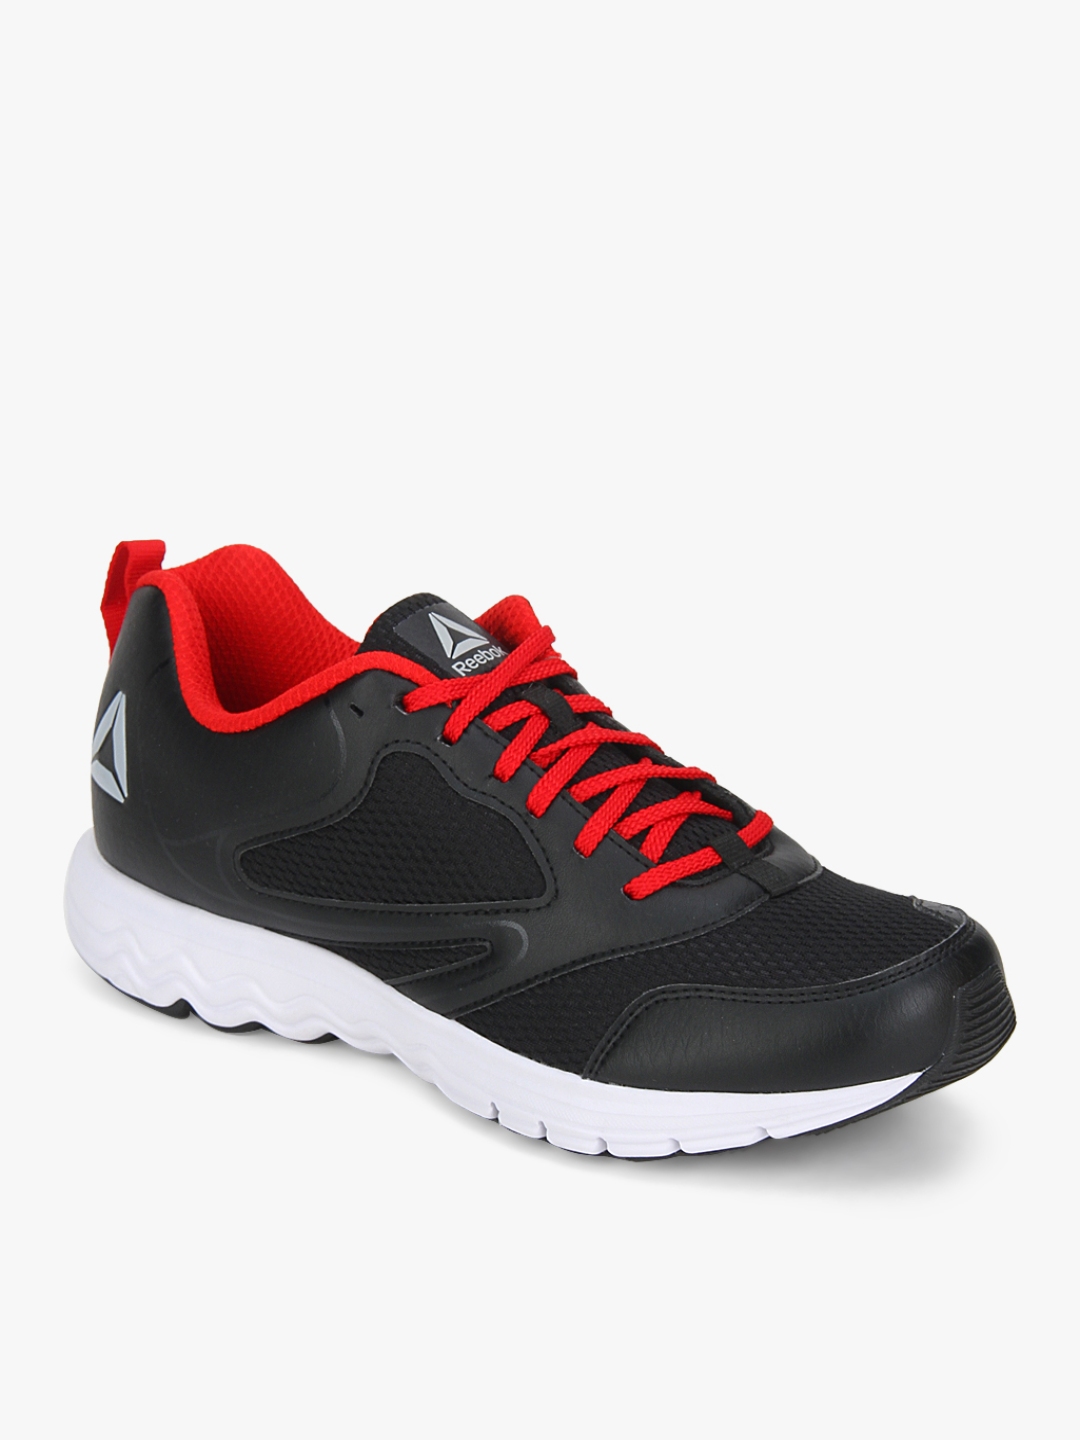 reebok turbo xtreme running shoes